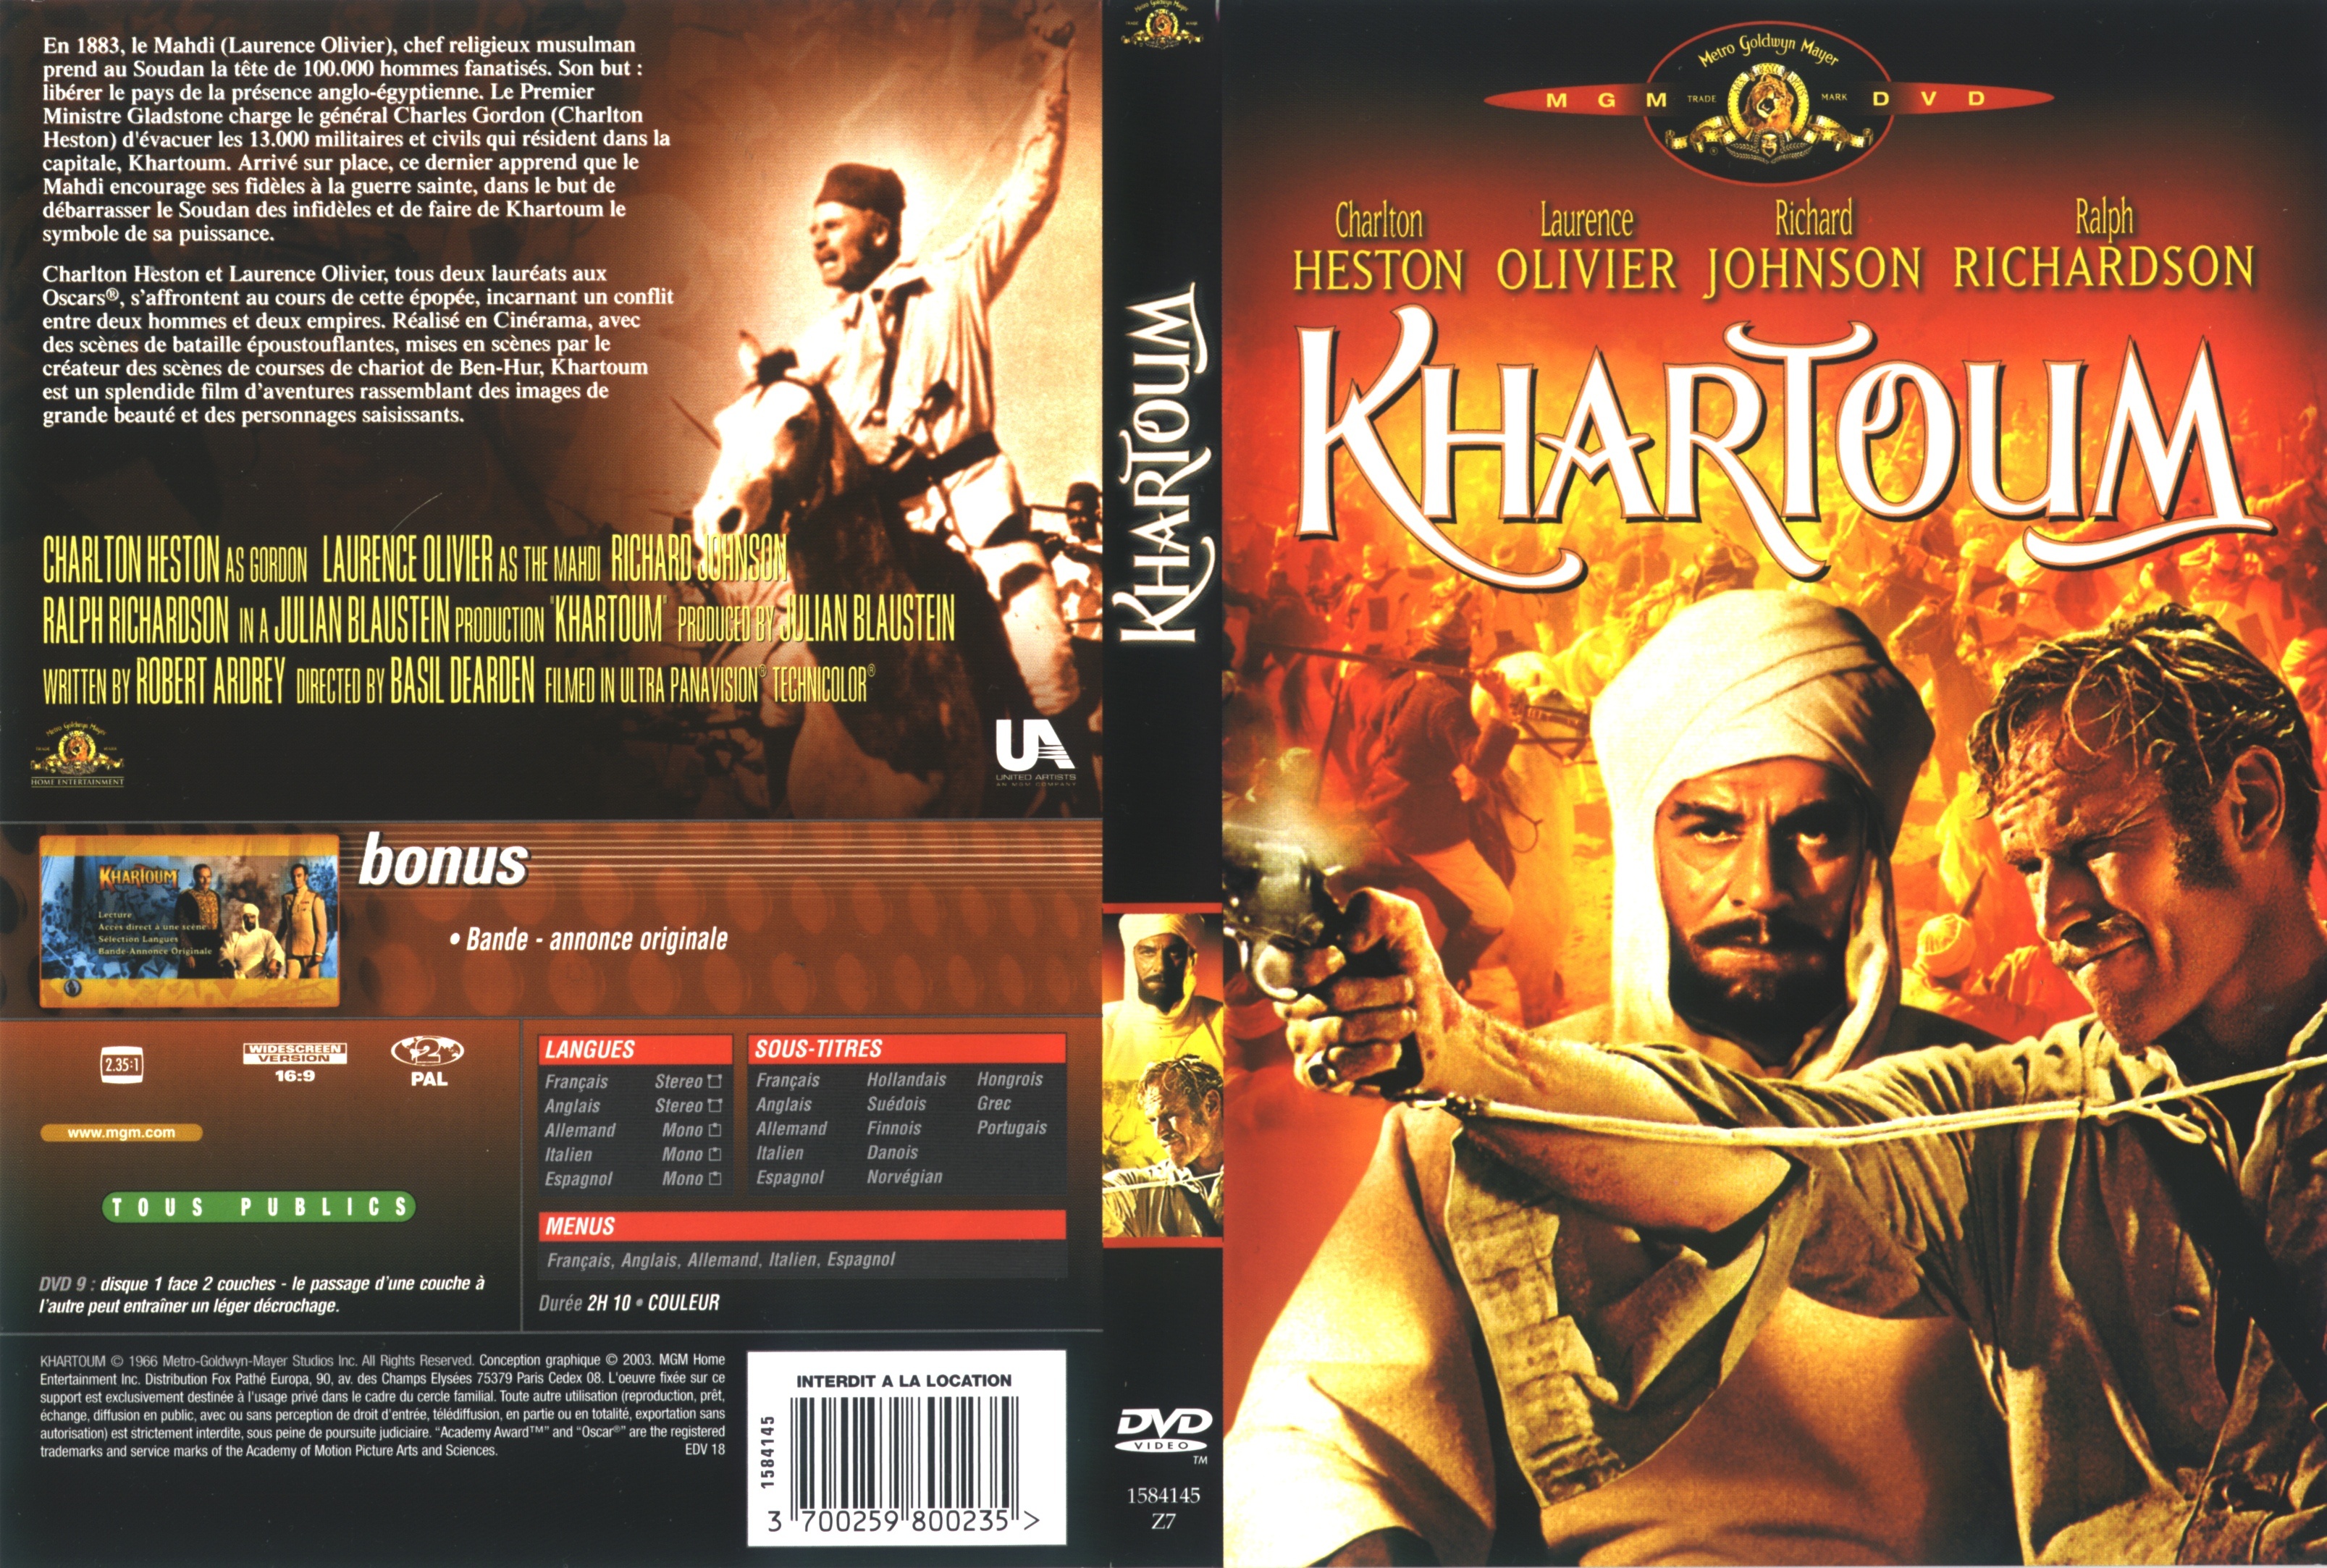 Jaquette DVD Khartoum v2